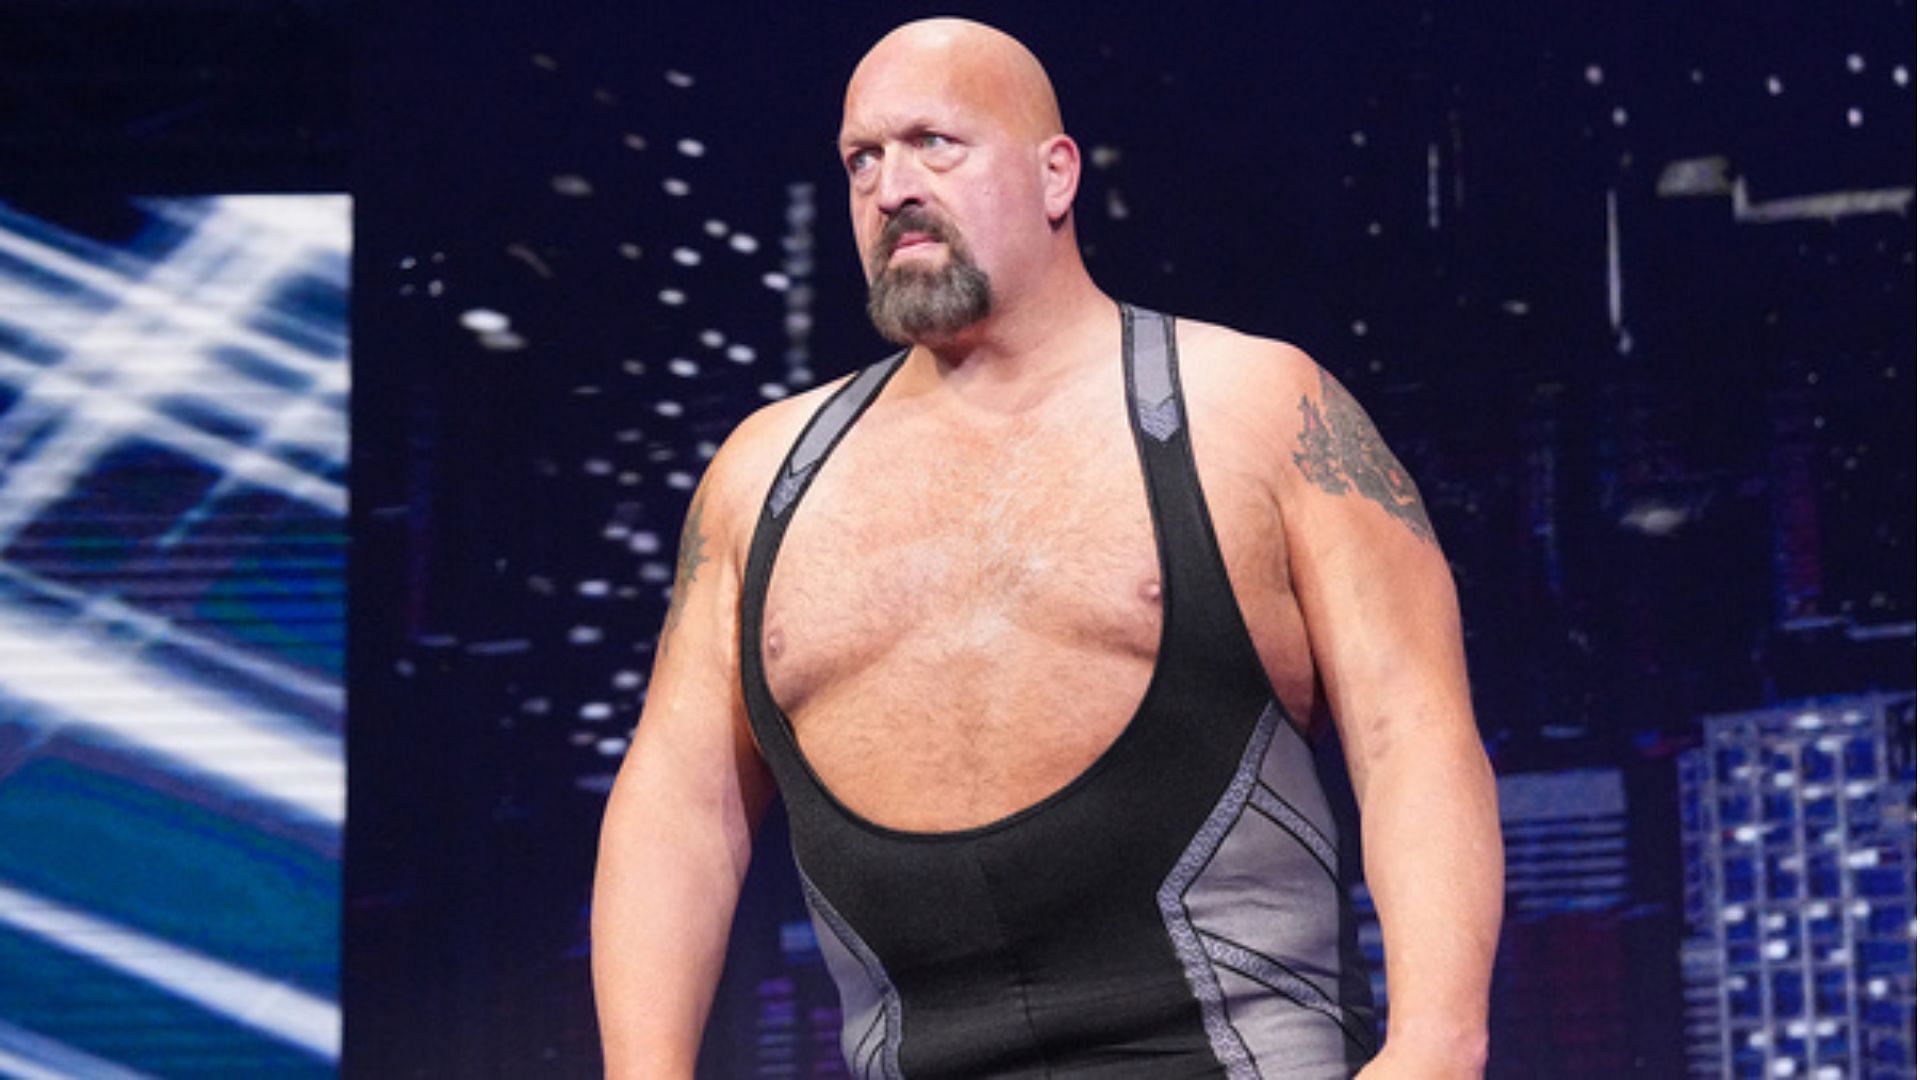 The Big Show is former WWE World Heavyweight Champion